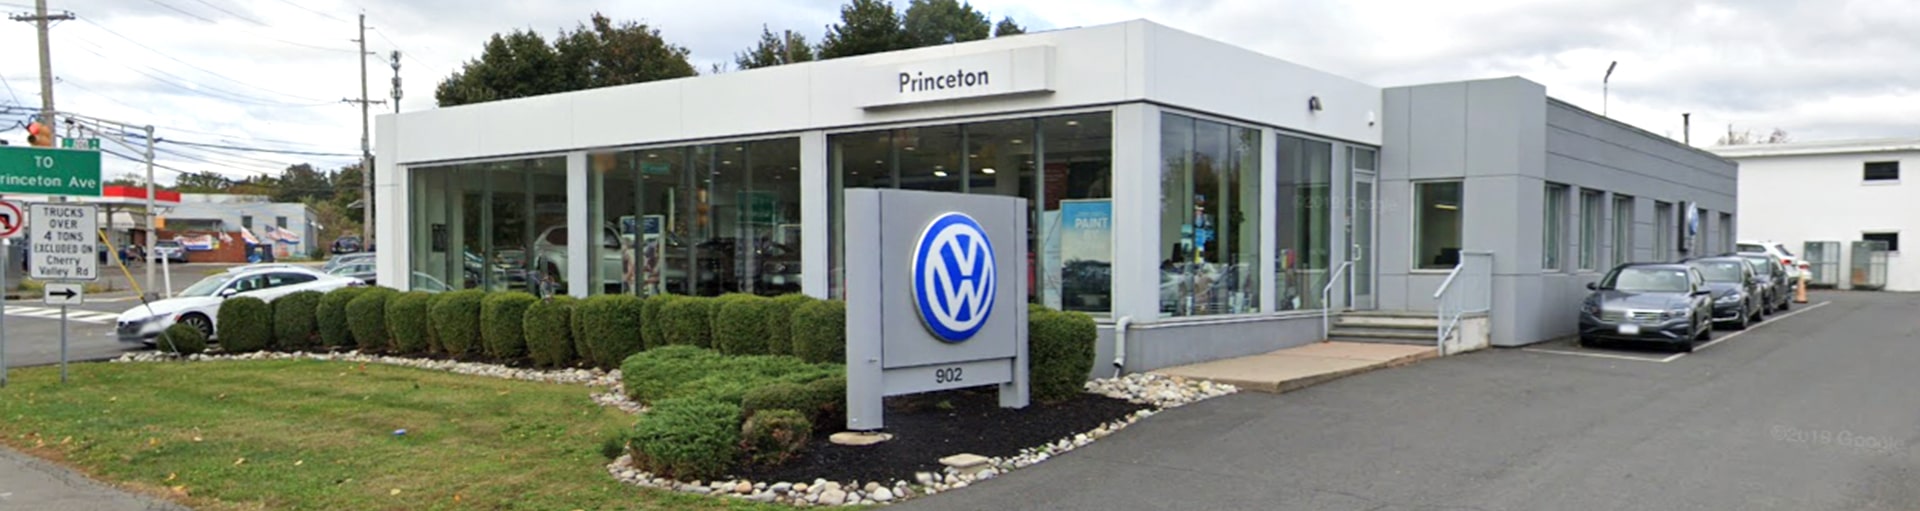 Volkswagen Princeton Wheel Alignment Services